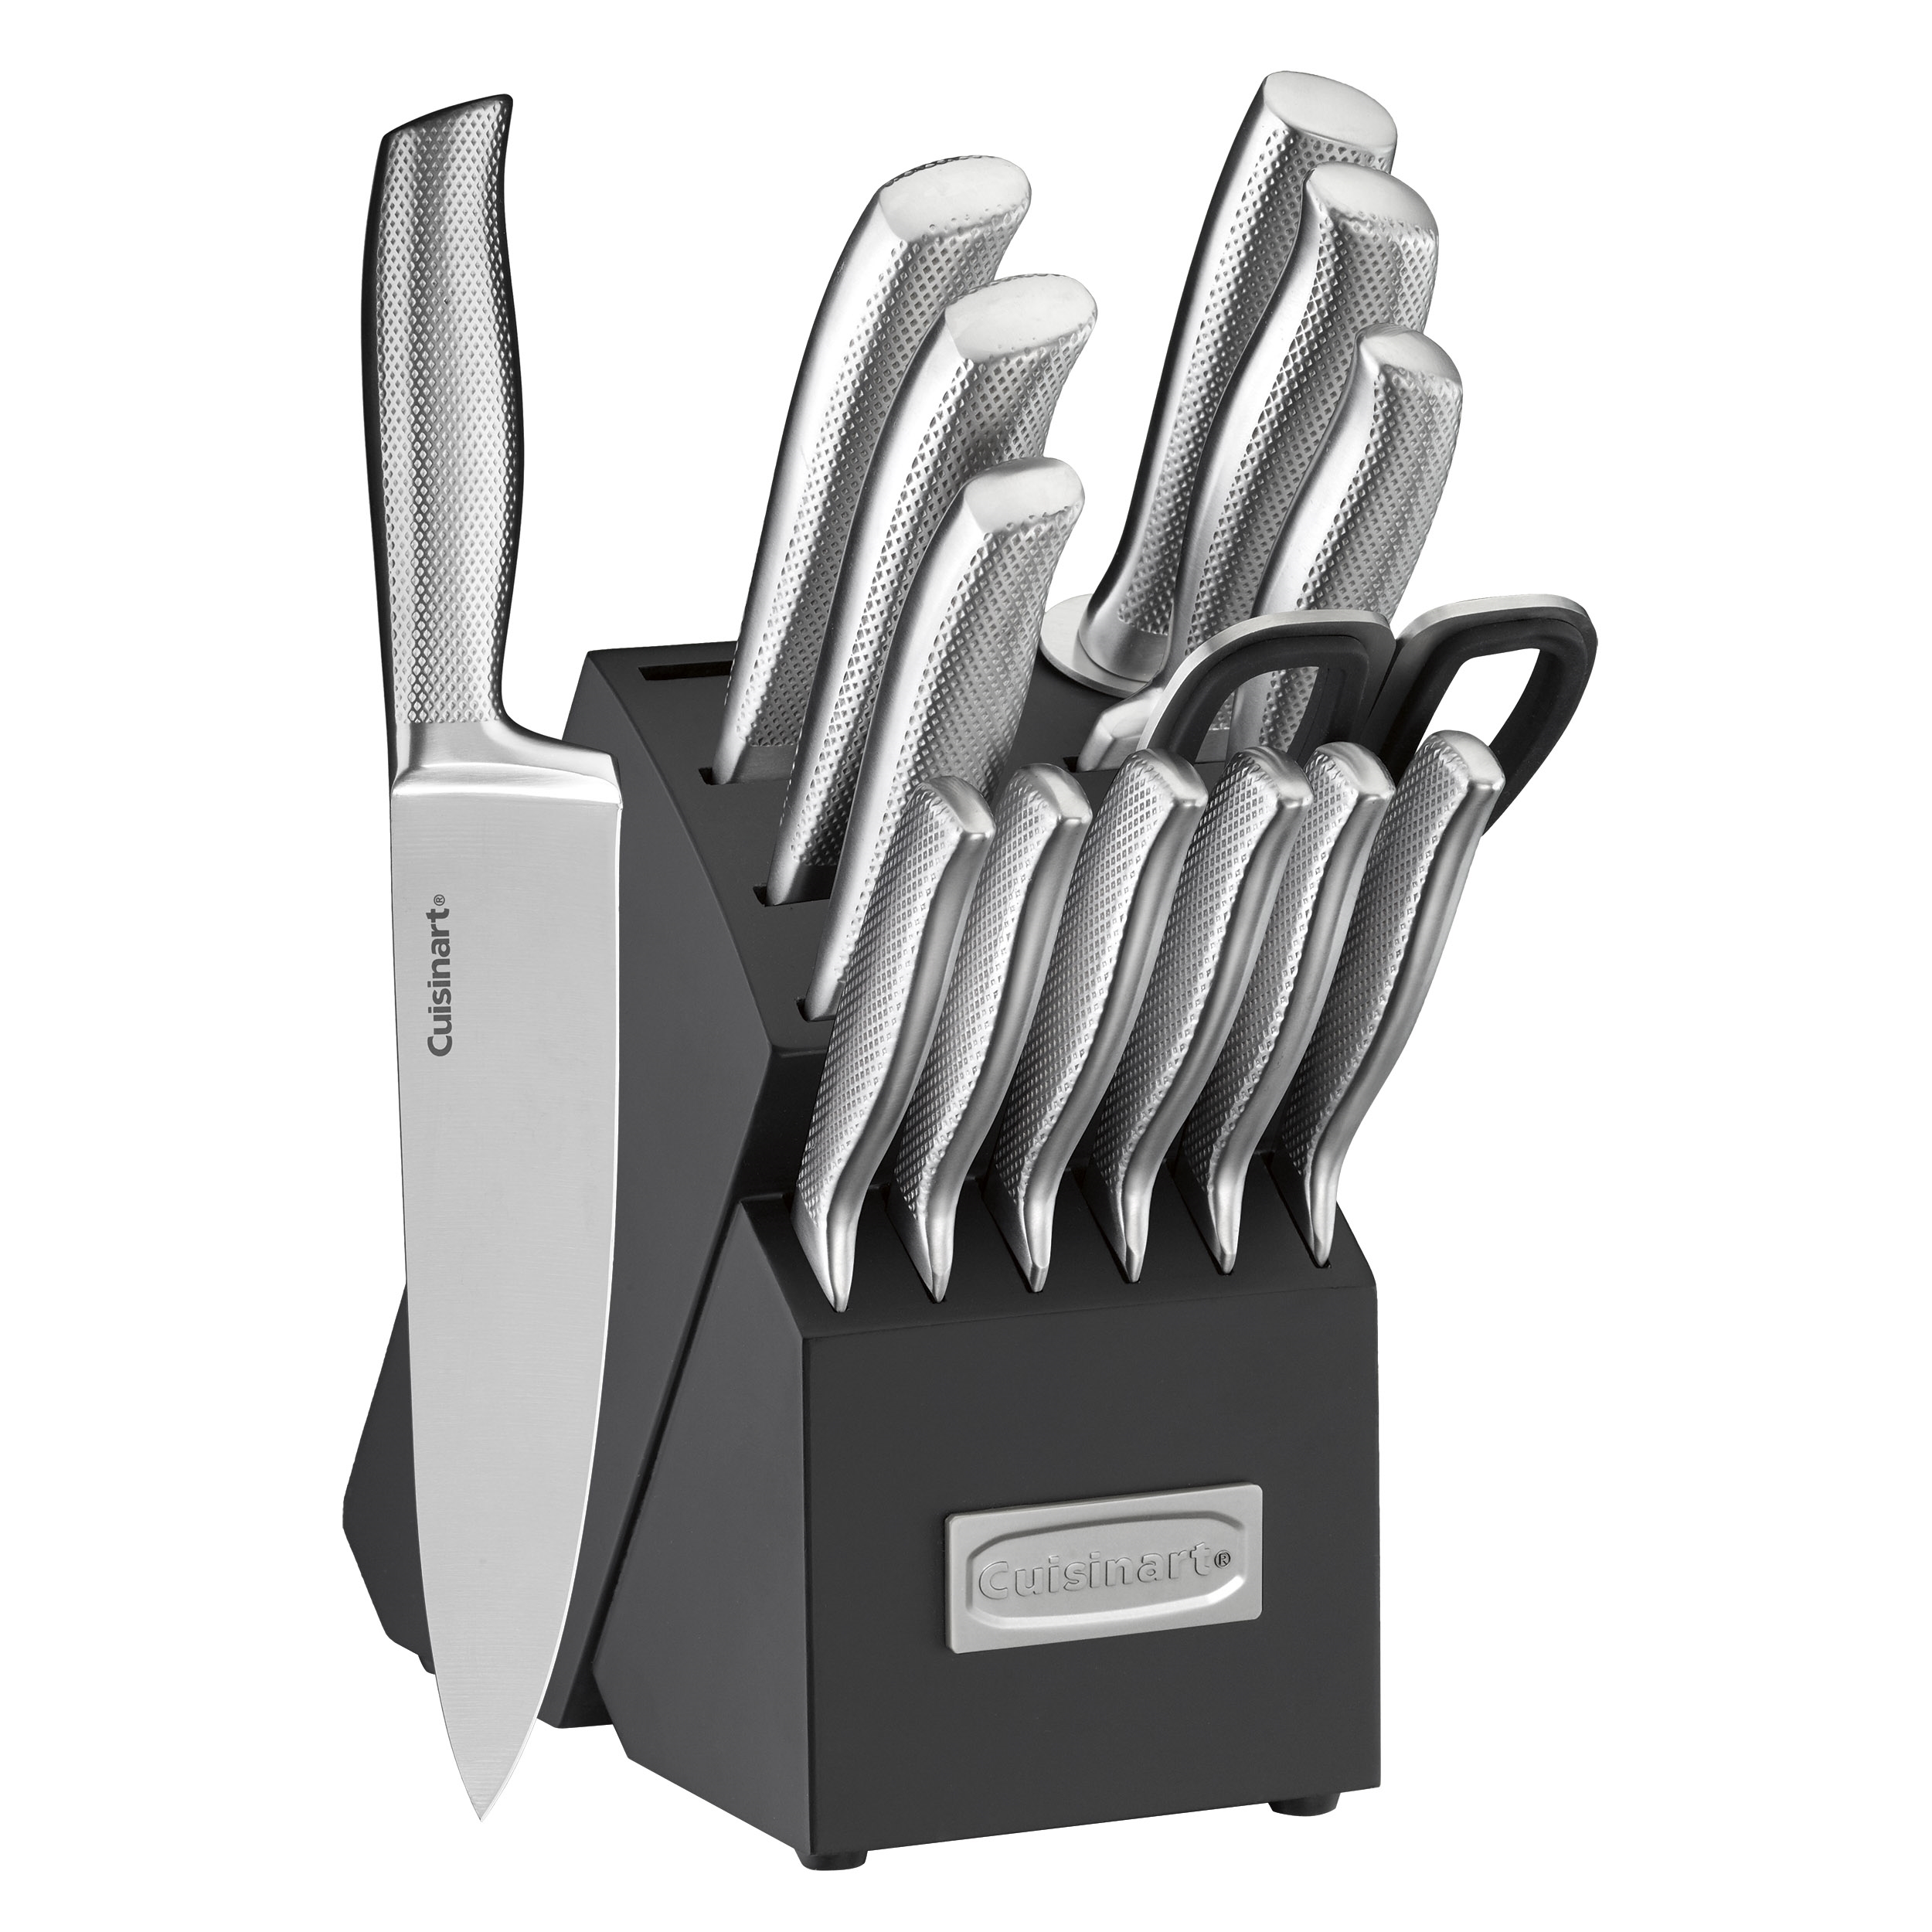 15 piece German Stainless Steel Hollow Handle Cutlery Block Set